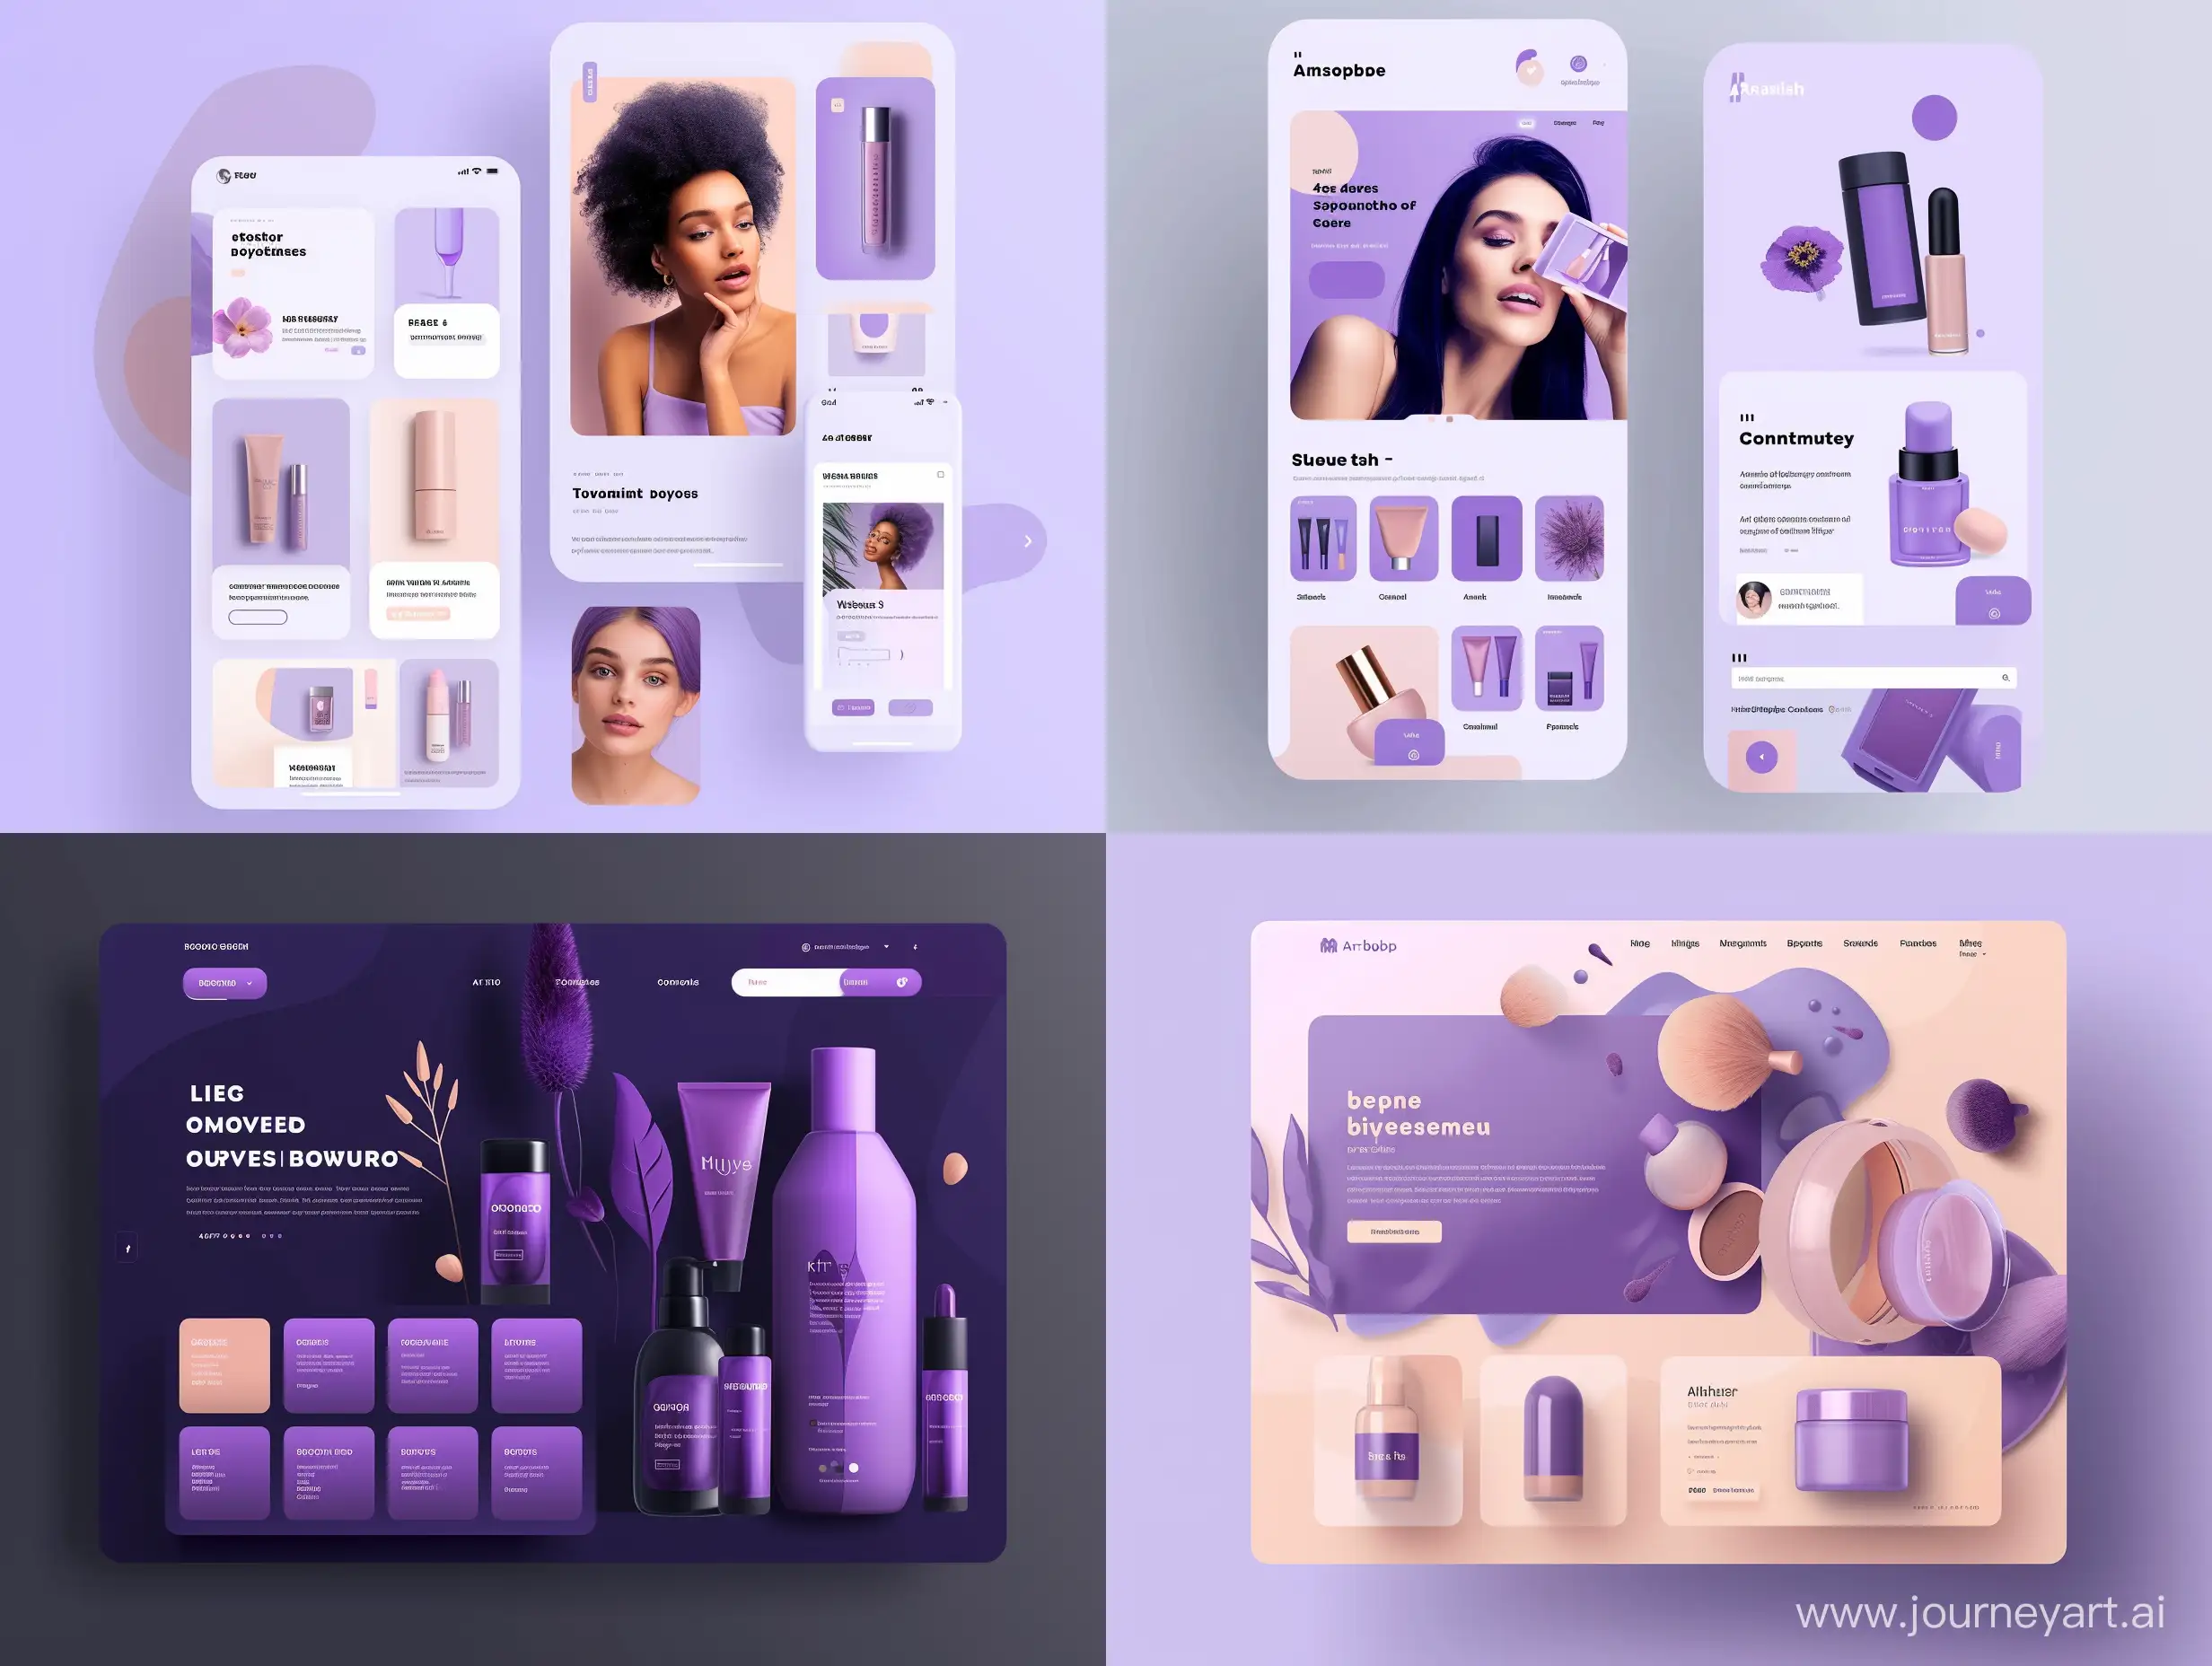 Modern-Classy-Cosmetic-Buyout-Company-Landing-Page-in-Trending-Purple-Palette